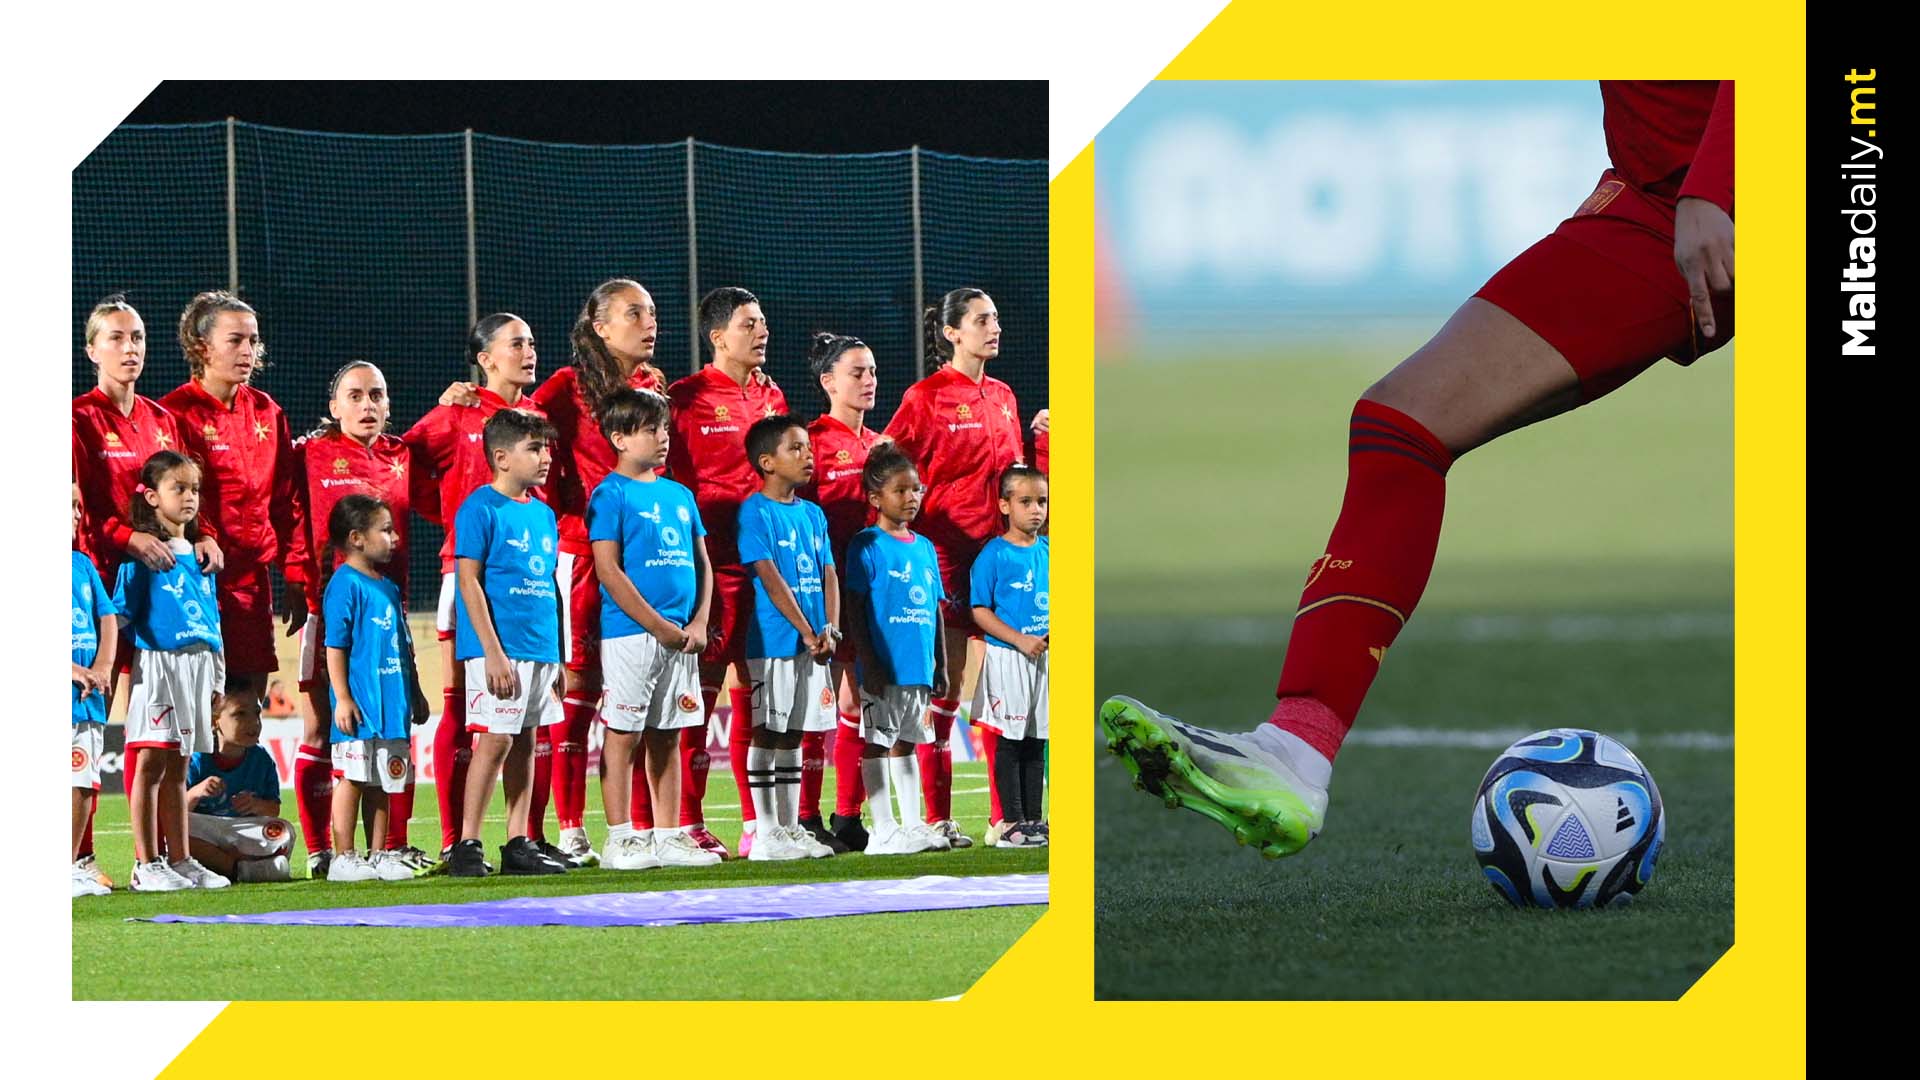 Maternal Support For Malta's Women Footballers